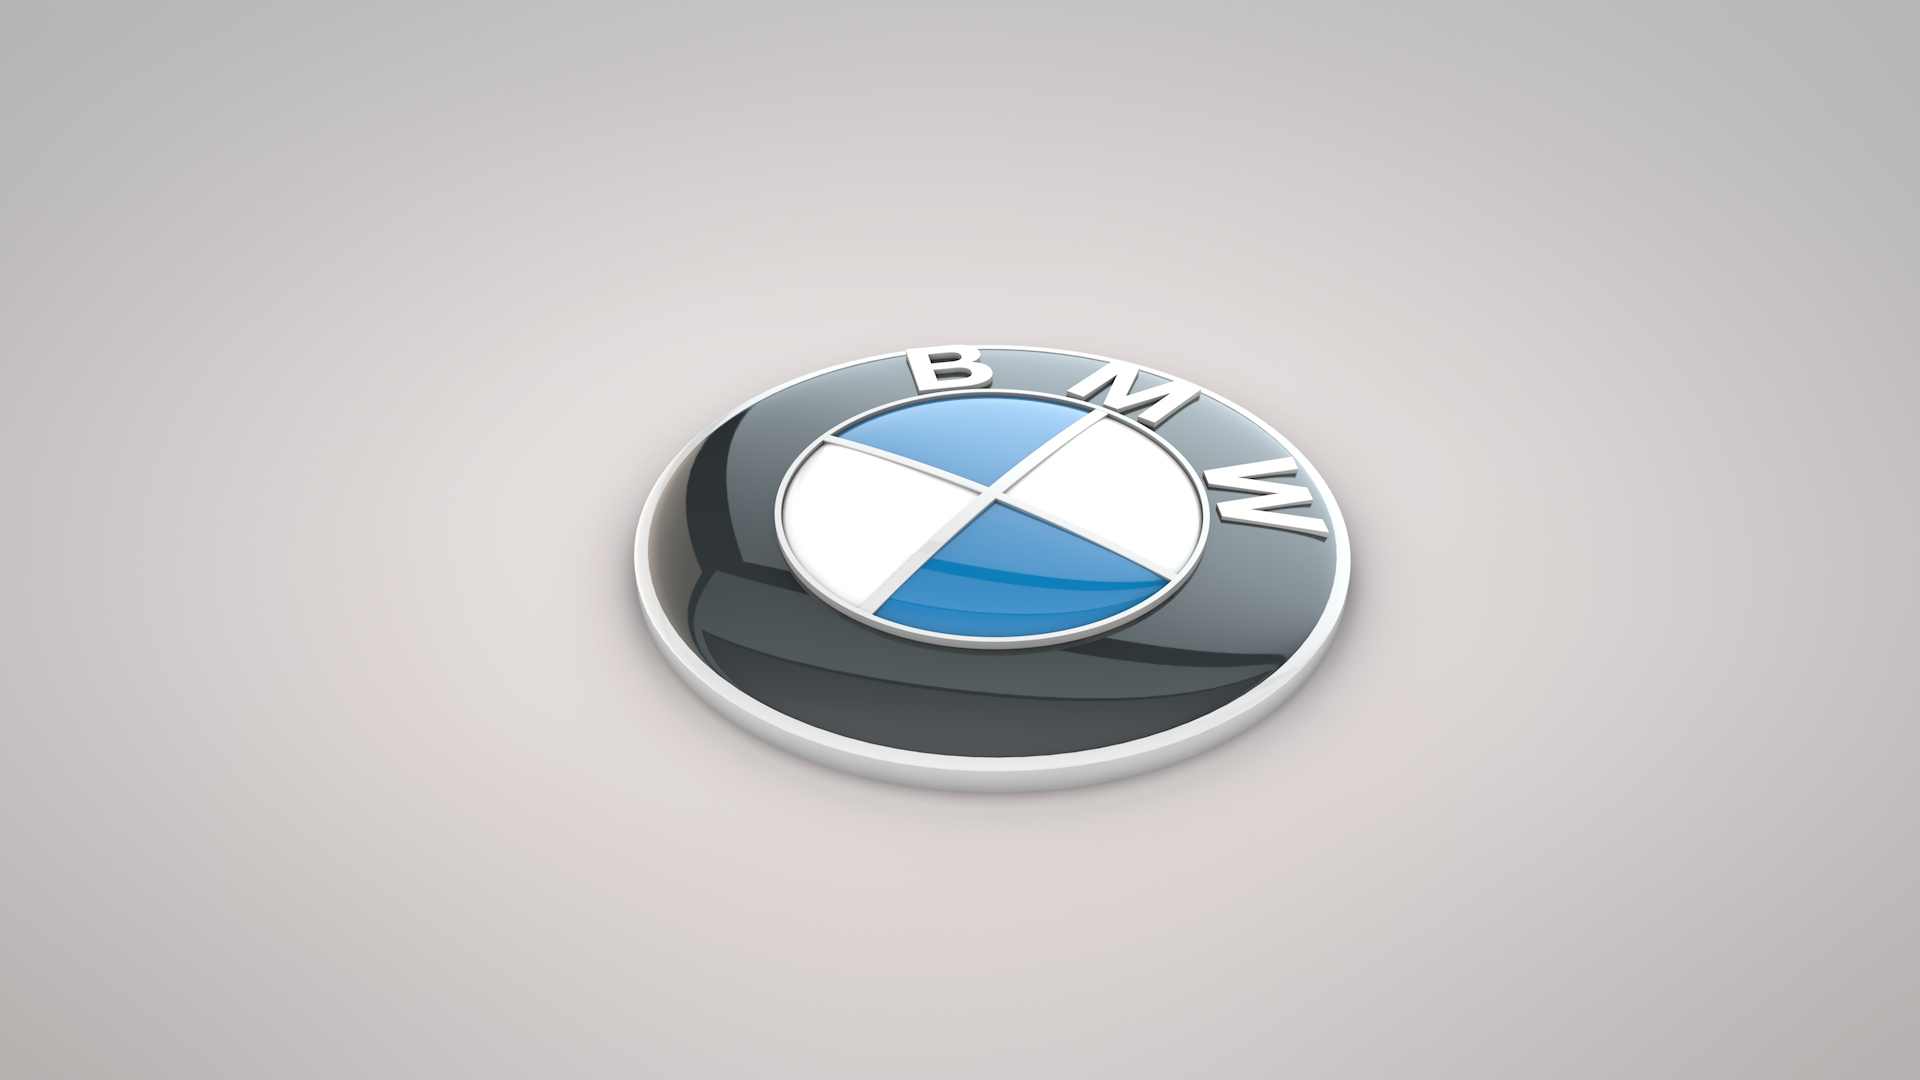 bmw logo wallpaper hd,logo,circle,emblem,fashion accessory,symbol